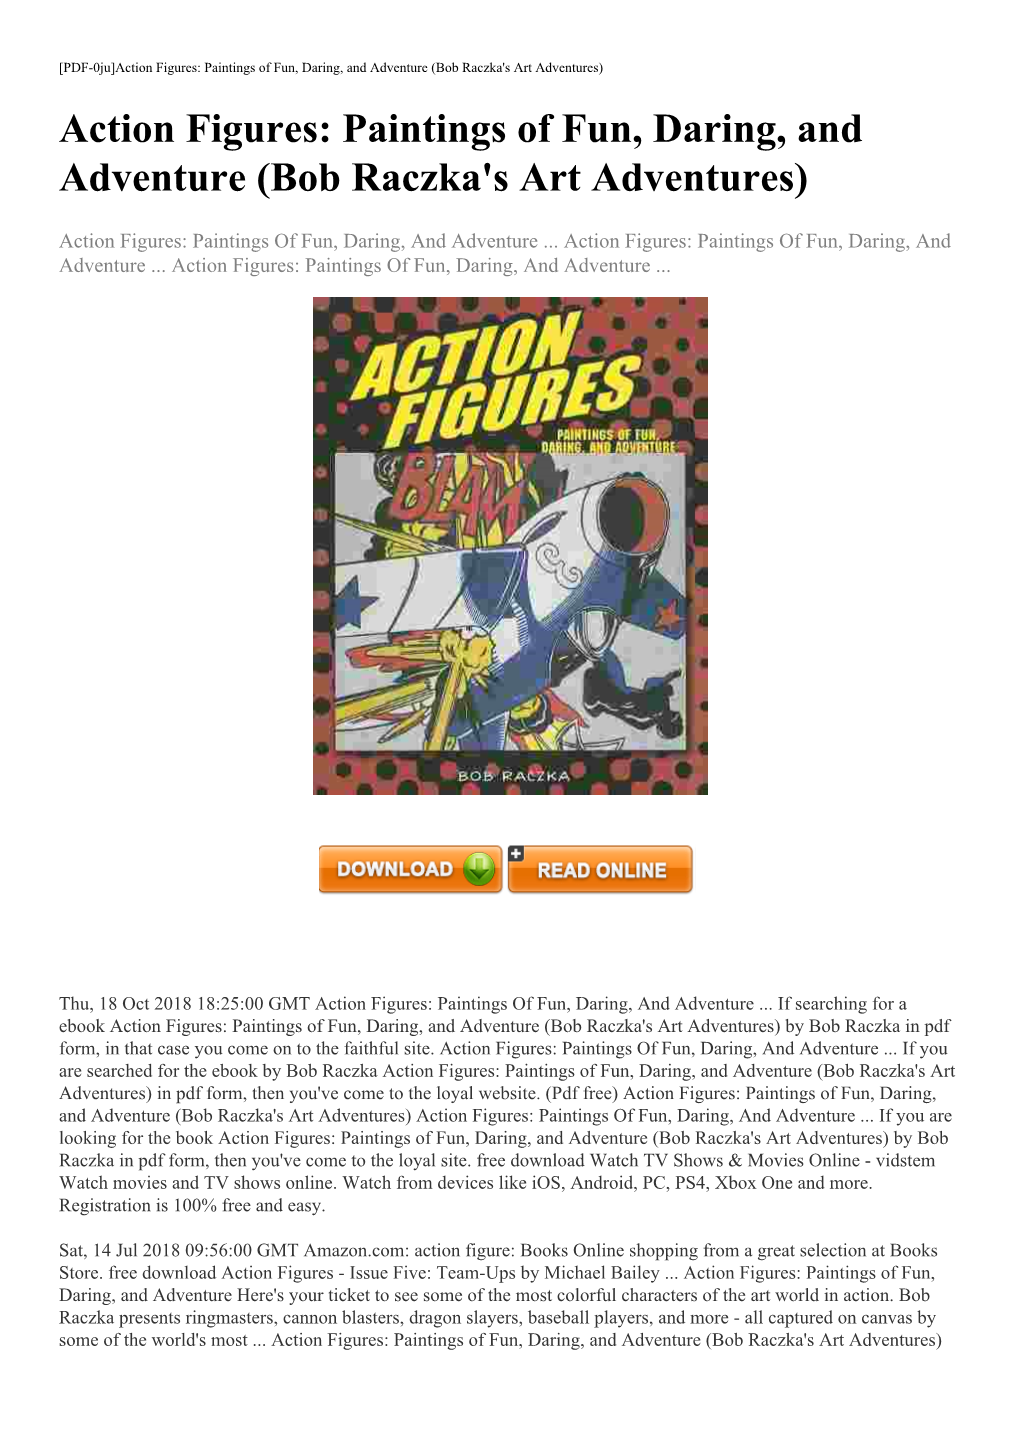 (Pdf Free) Action Figures: Paintings of Fun, Daring, and Adventure (Bob Raczka's Art Adventures) Action Figures: Paintings of Fun, Daring, and Adventure